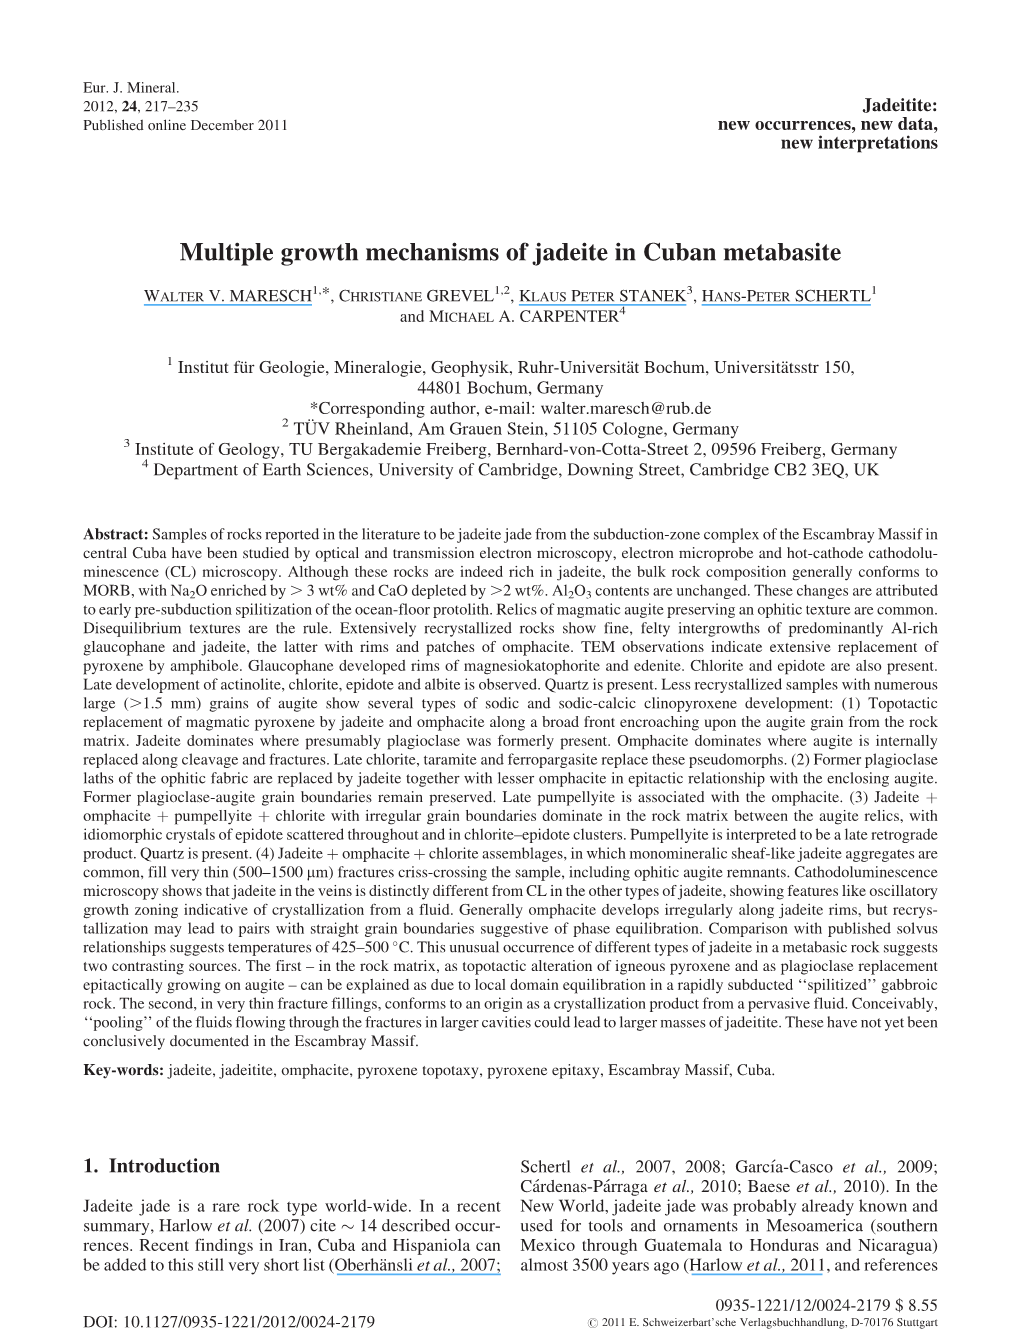 Multiple Growth Mechanisms of Jadeite in Cuban Metabasite